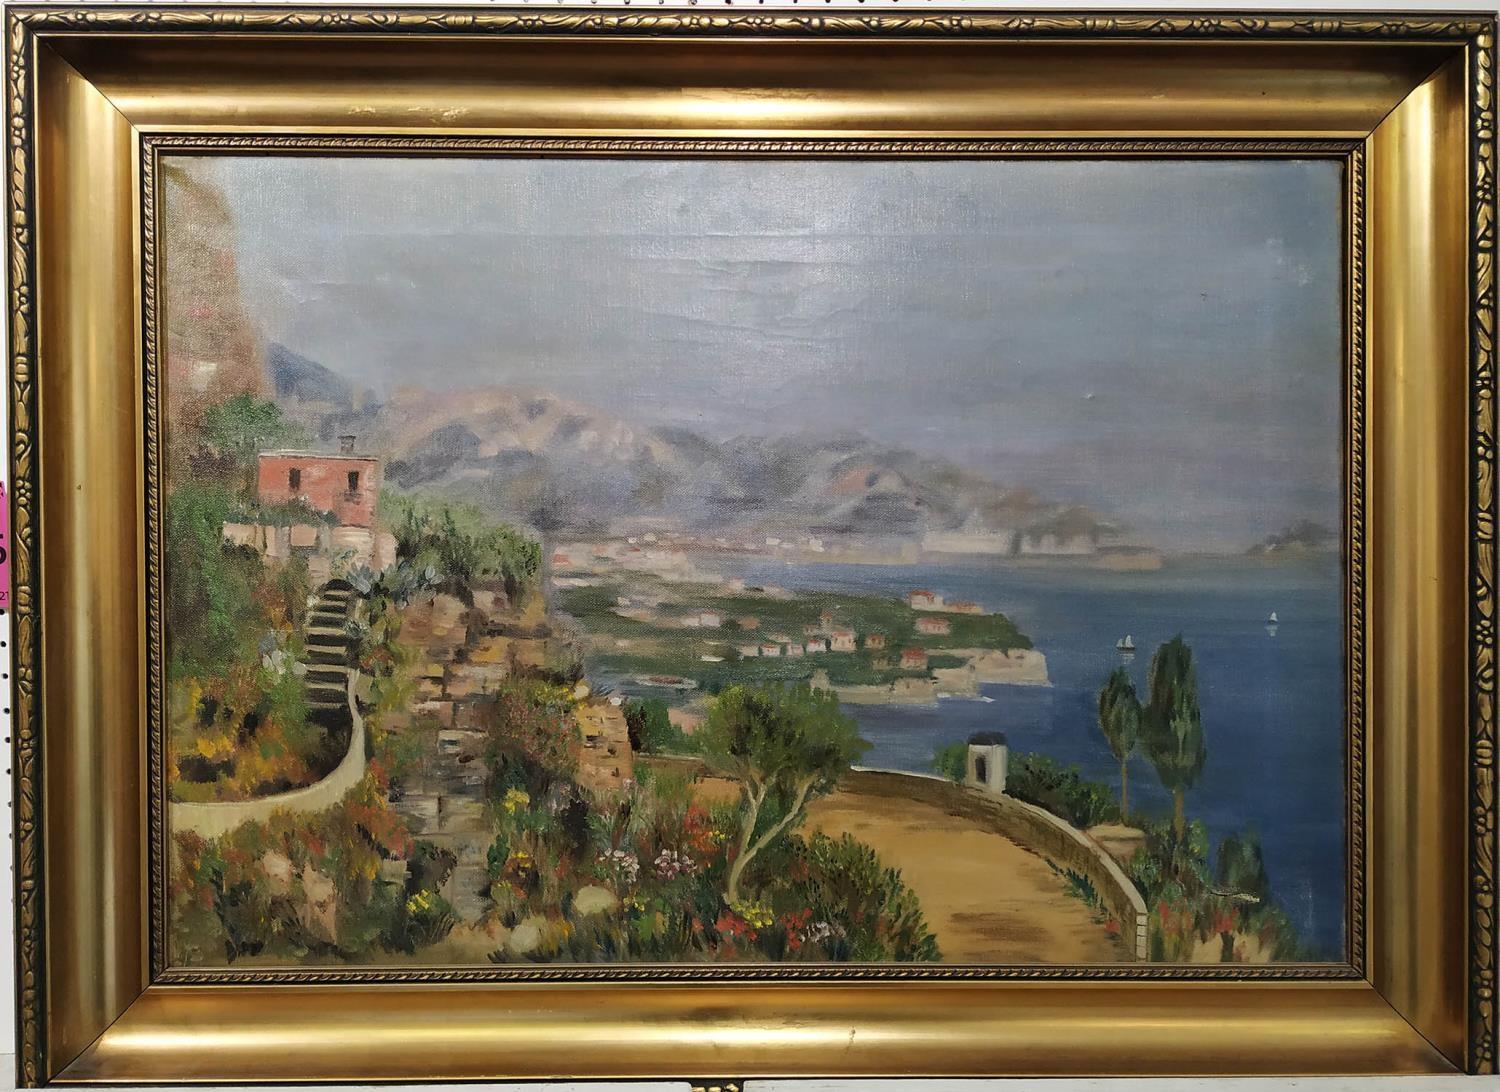 P. MOGENSEN (20th Century Danish) 'Côte d'Azur', oil on canvas, signed to stretcher, 44cm x 60cm,